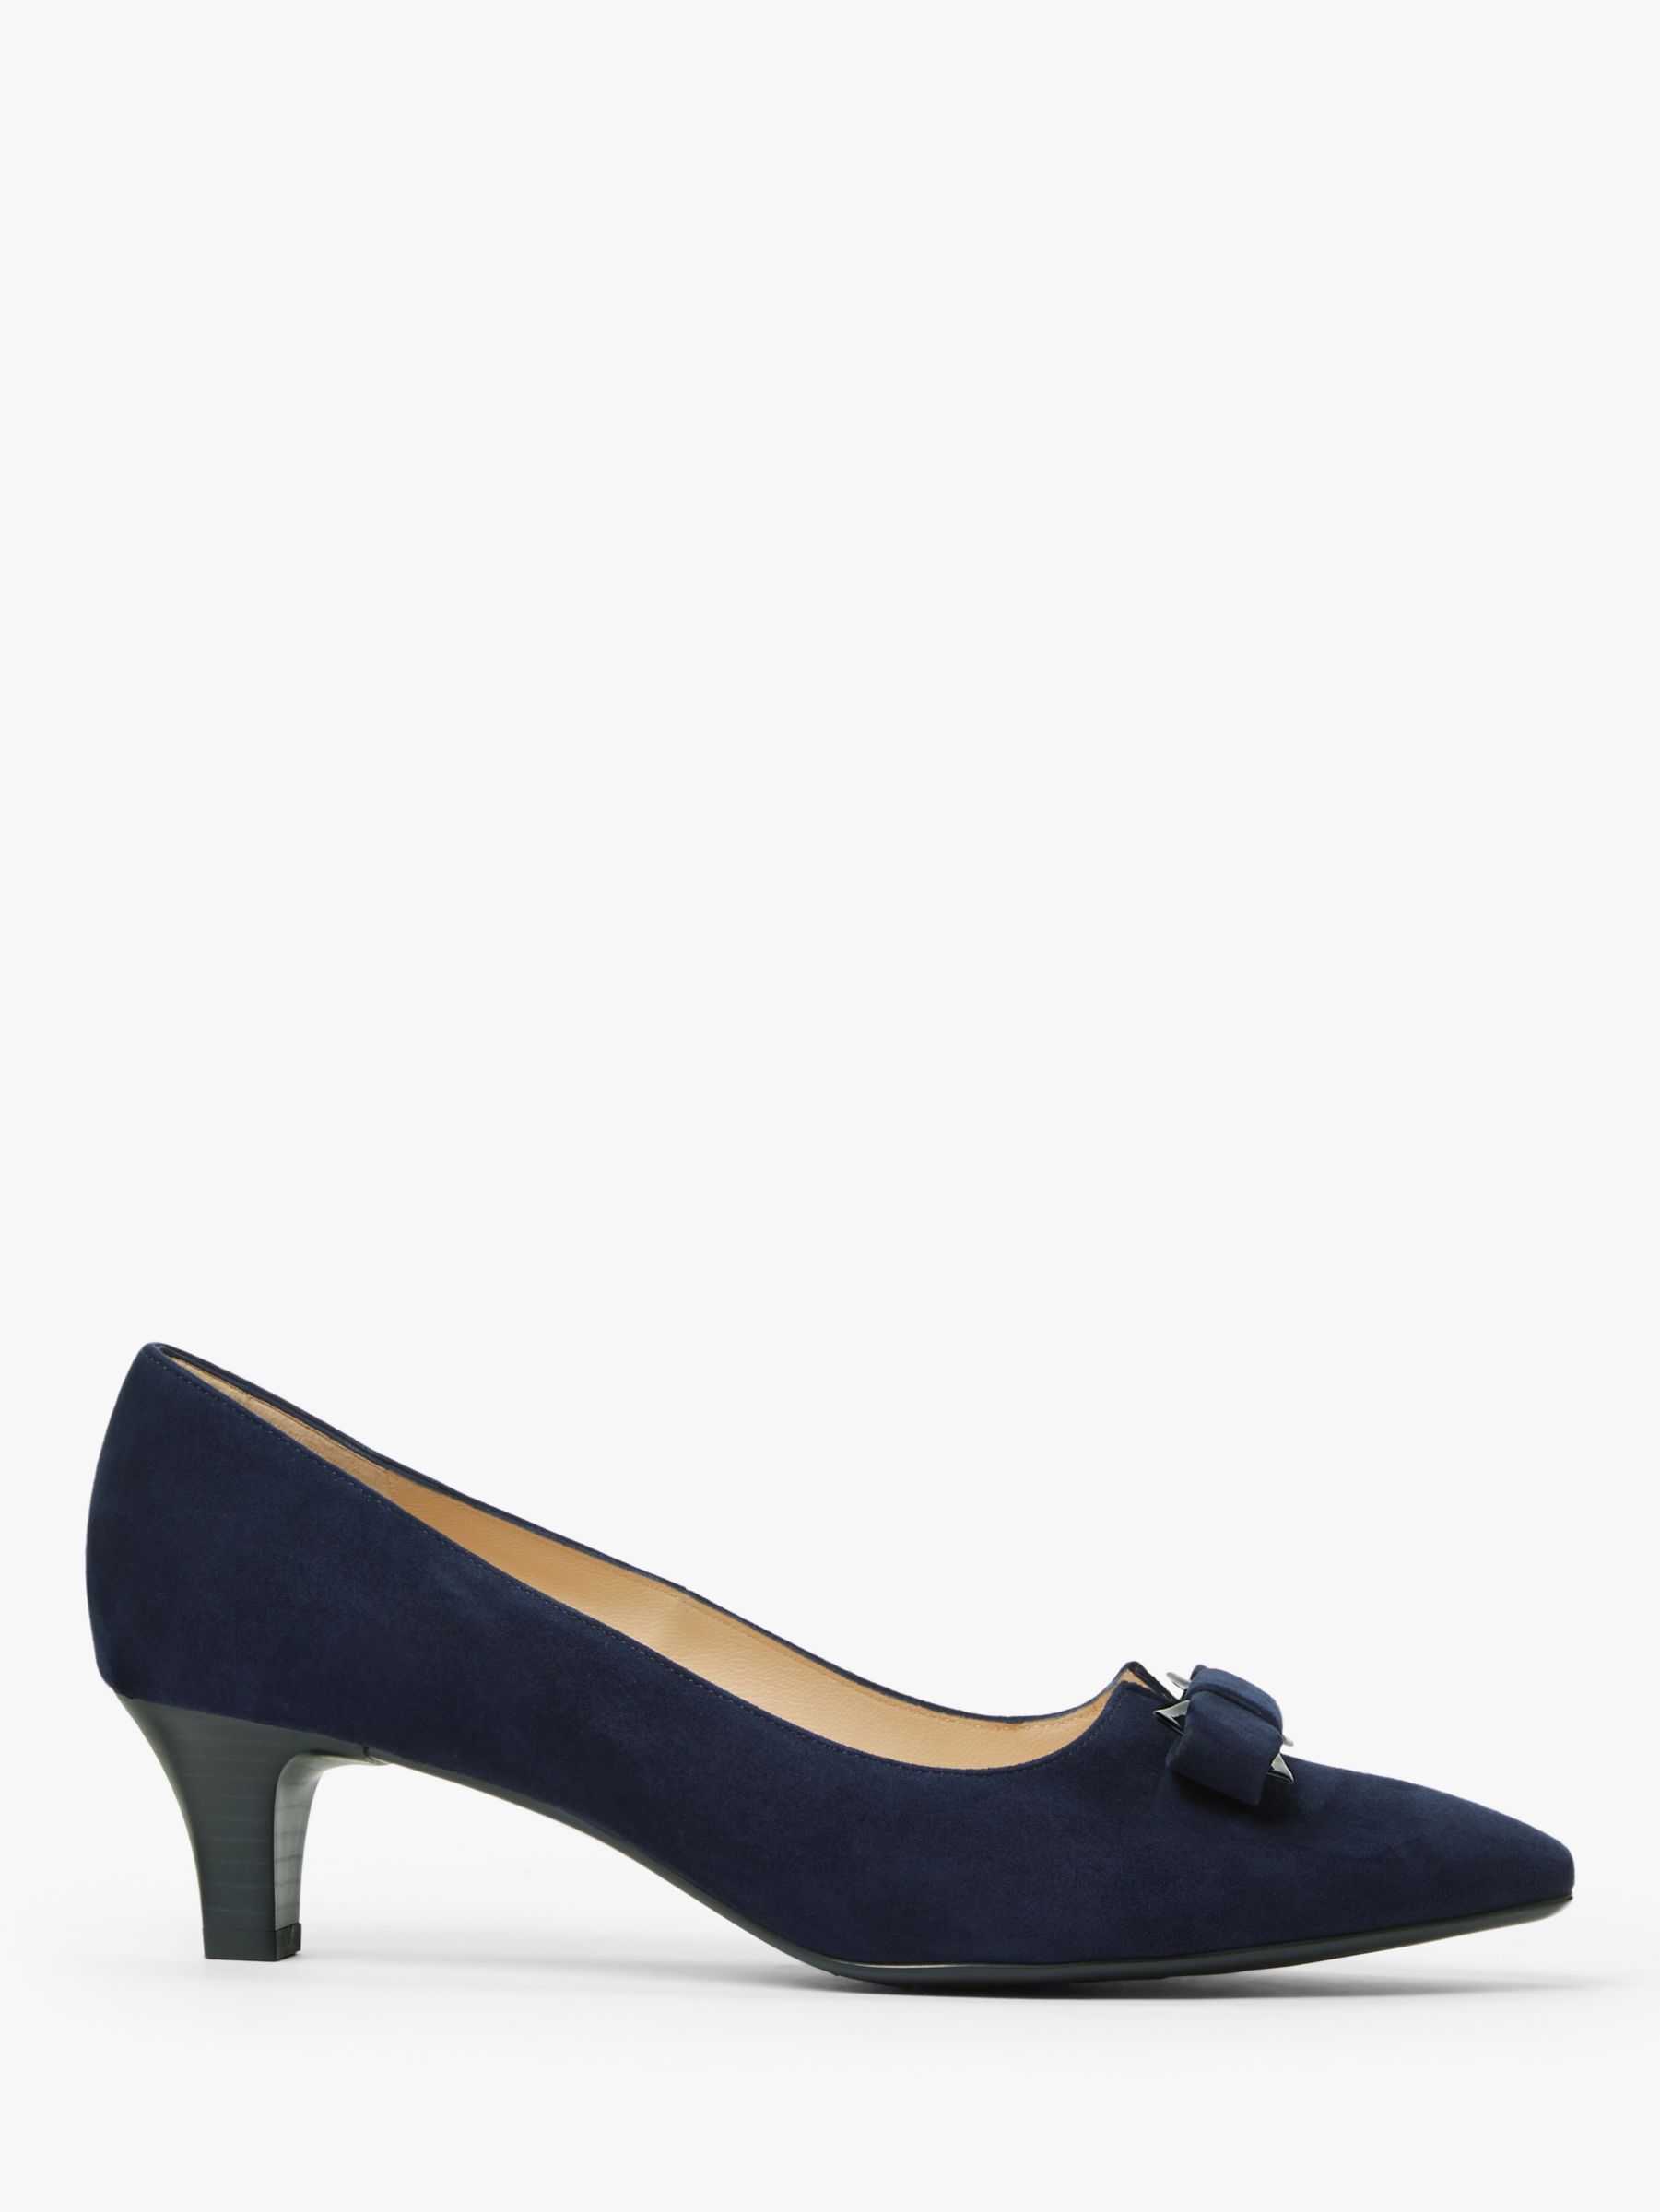 navy blue low heel court shoes